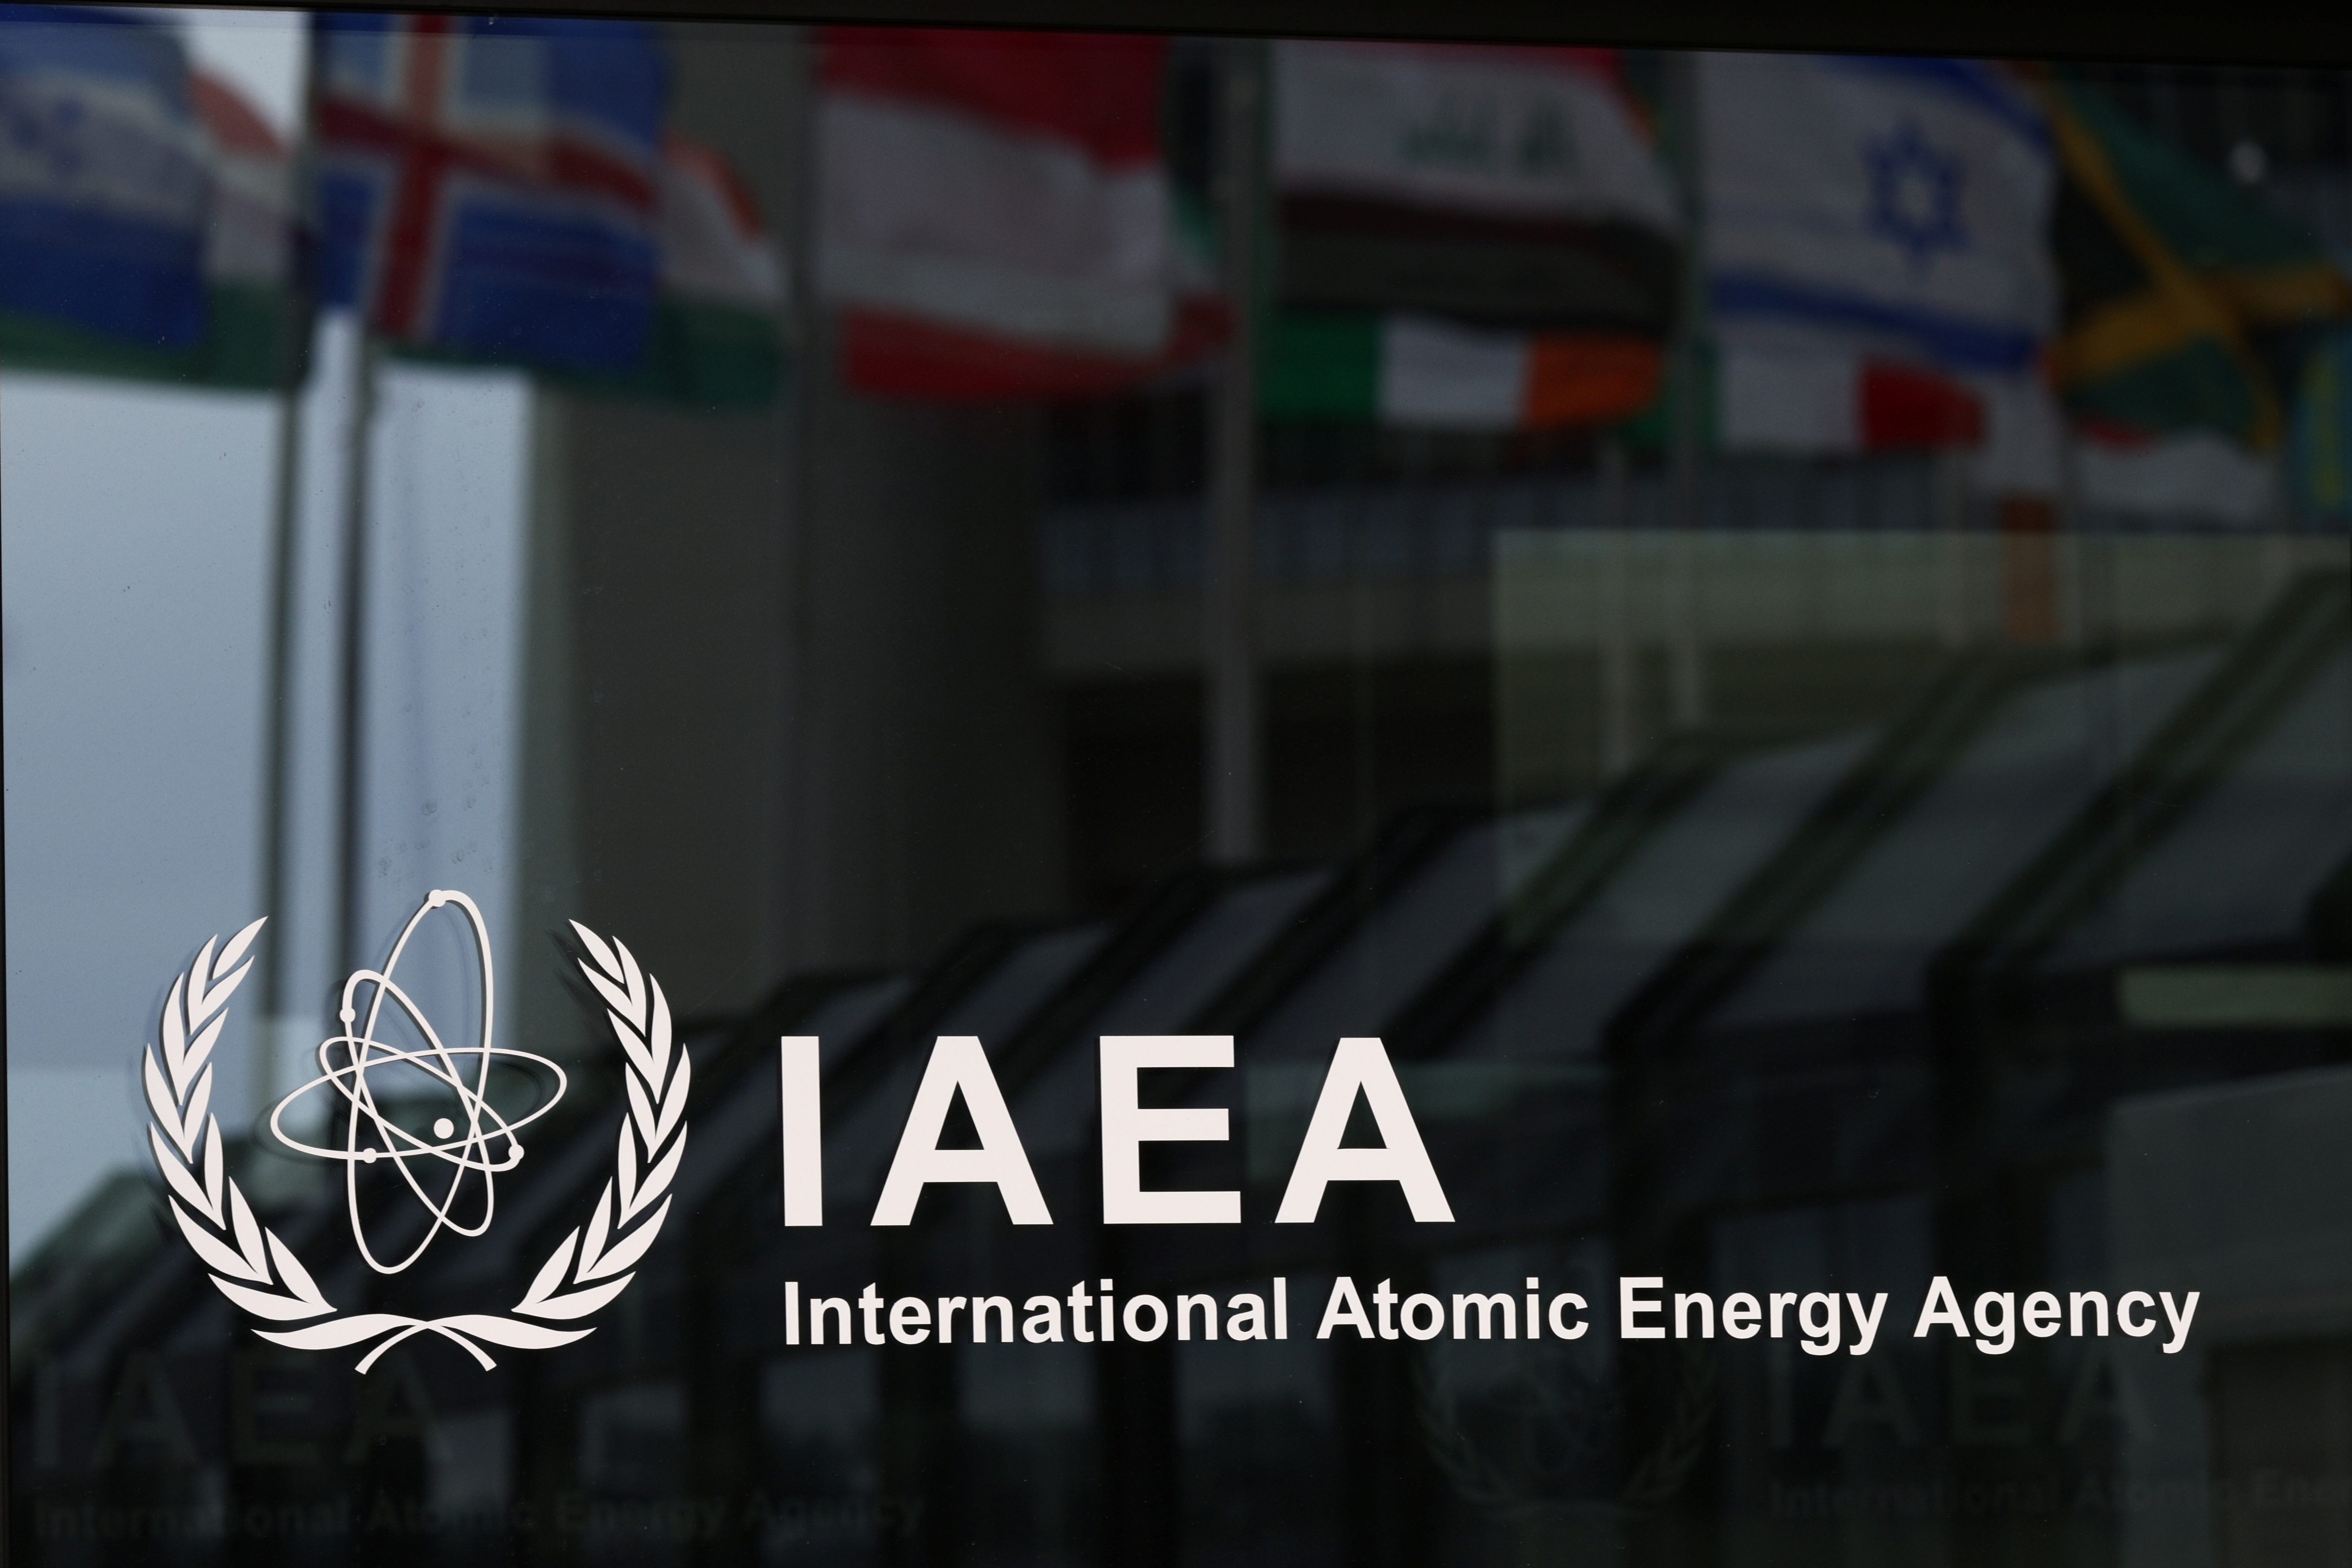 The logo of the International Atomic Energy Agency (IAEA) is seen at the IAEA headquarters, amid the coronavirus disease (COVID-19) pandemic, in Vienna, Austria May 24, 2021. REUTERS/Lisi Niesner